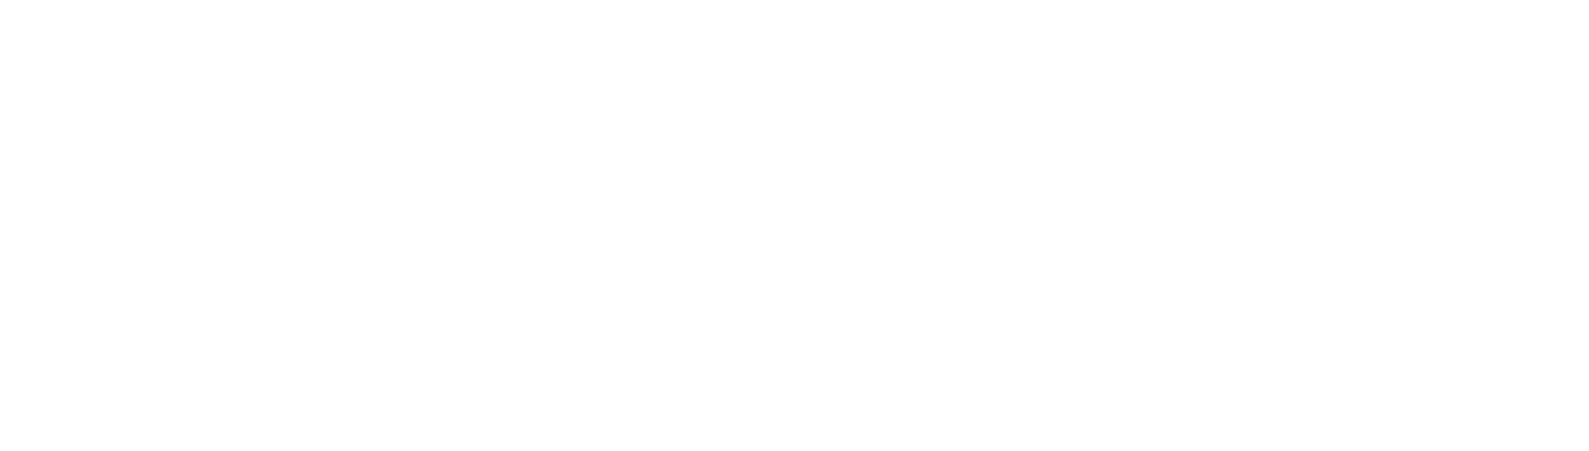 Healthcare Realty logo large for dark backgrounds (transparent PNG)